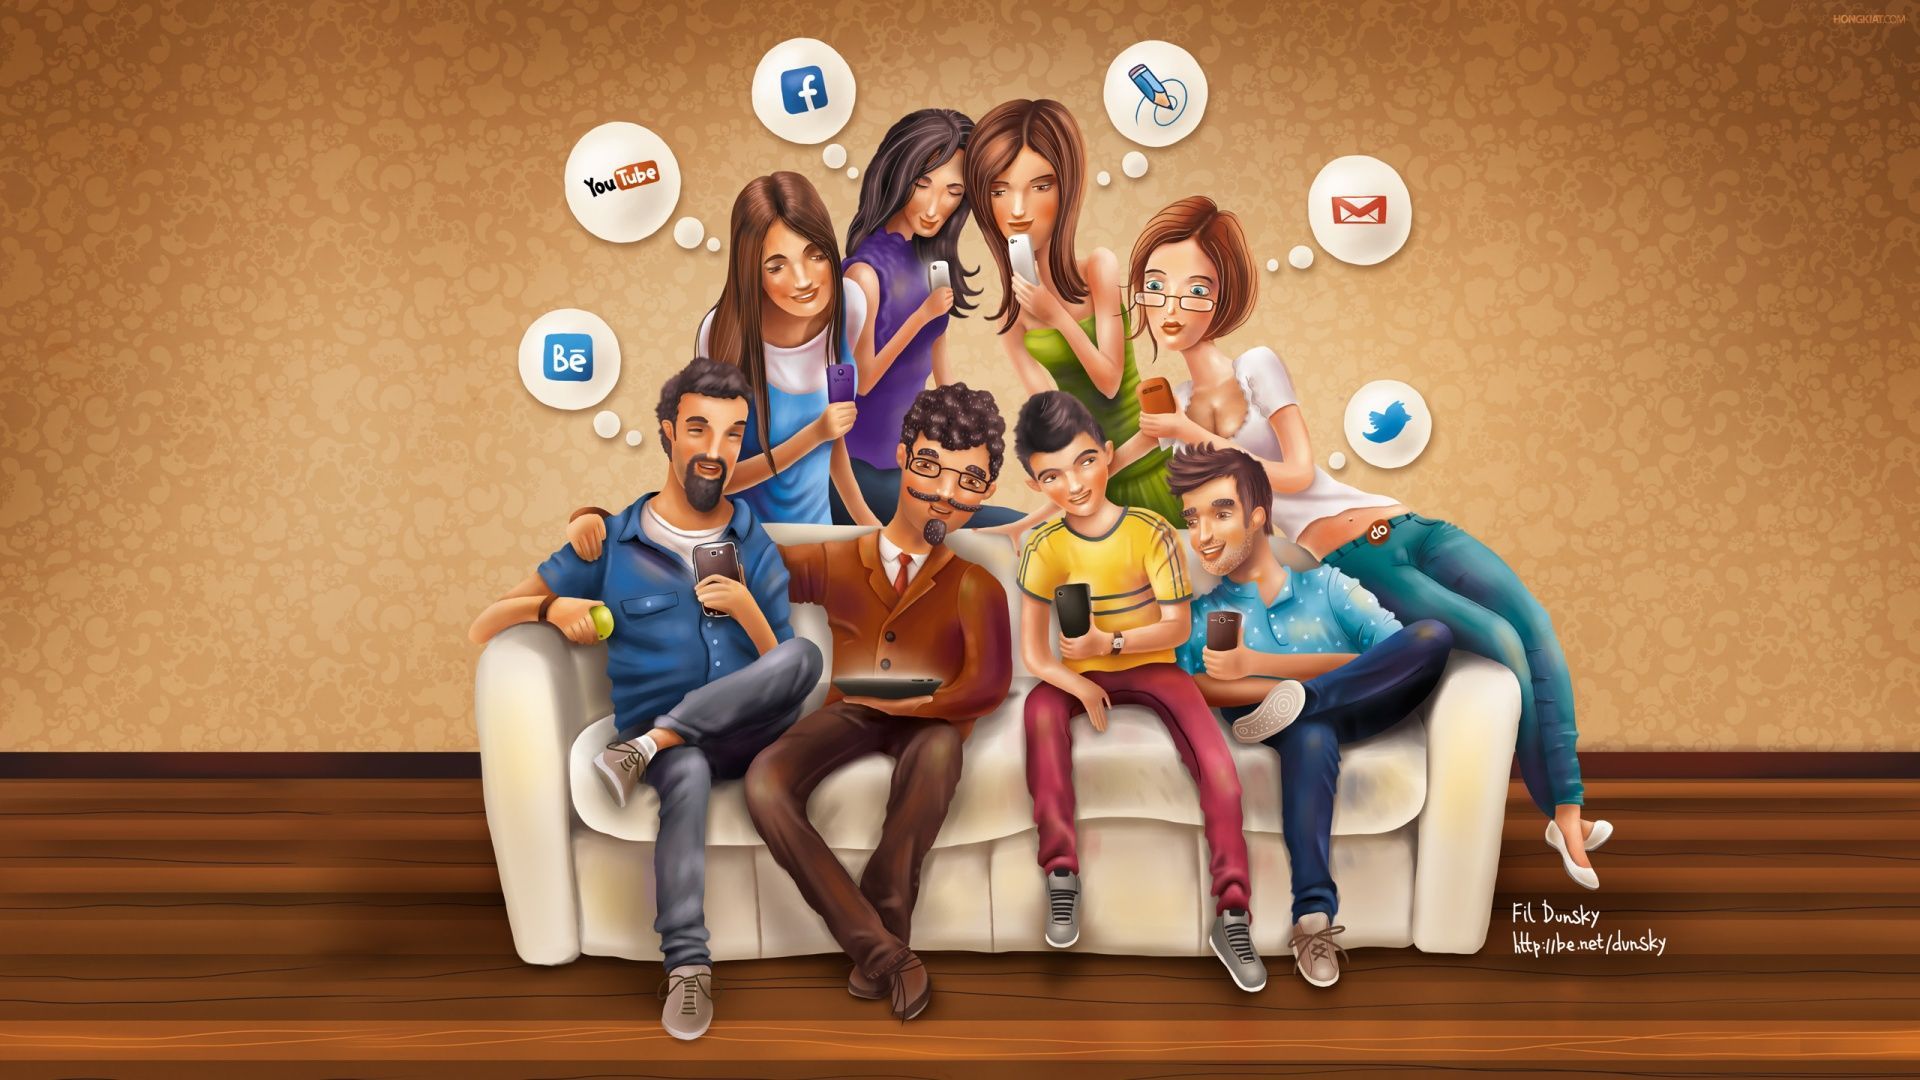 Download Social media cartoon wallpaper. Social media packages